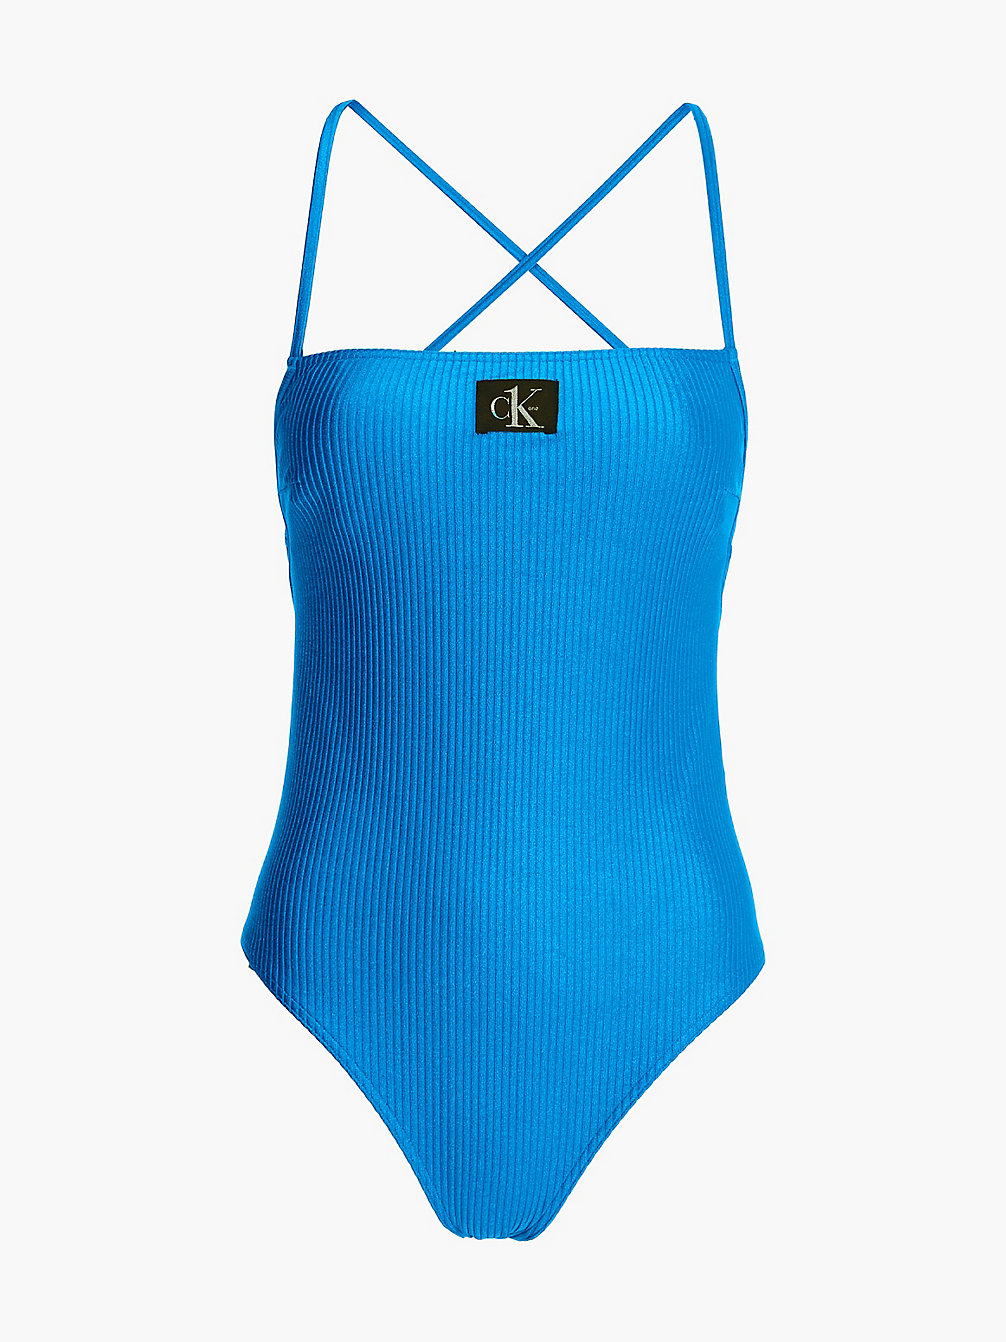 REGATTA BLUE Cross Back Swimsuit - CK One undefined women Calvin Klein